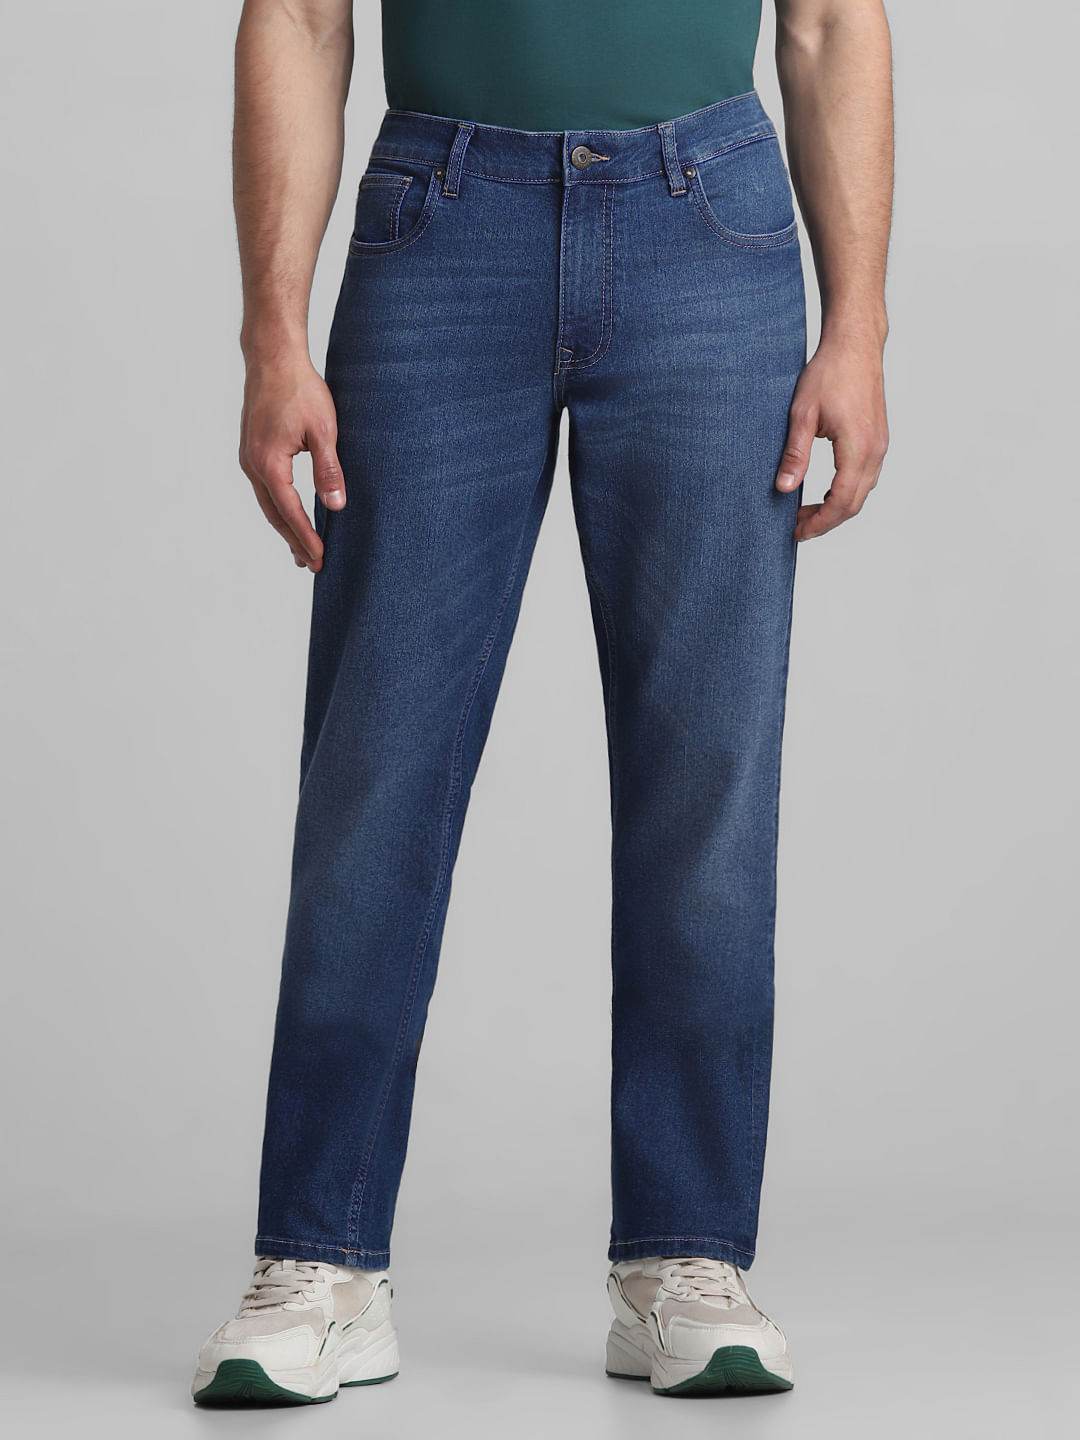 Buy U.S. Polo Assn. Denim Co. Men Slim Fit Stretchable Jeans - Jeans for Men  24265406 | Myntra